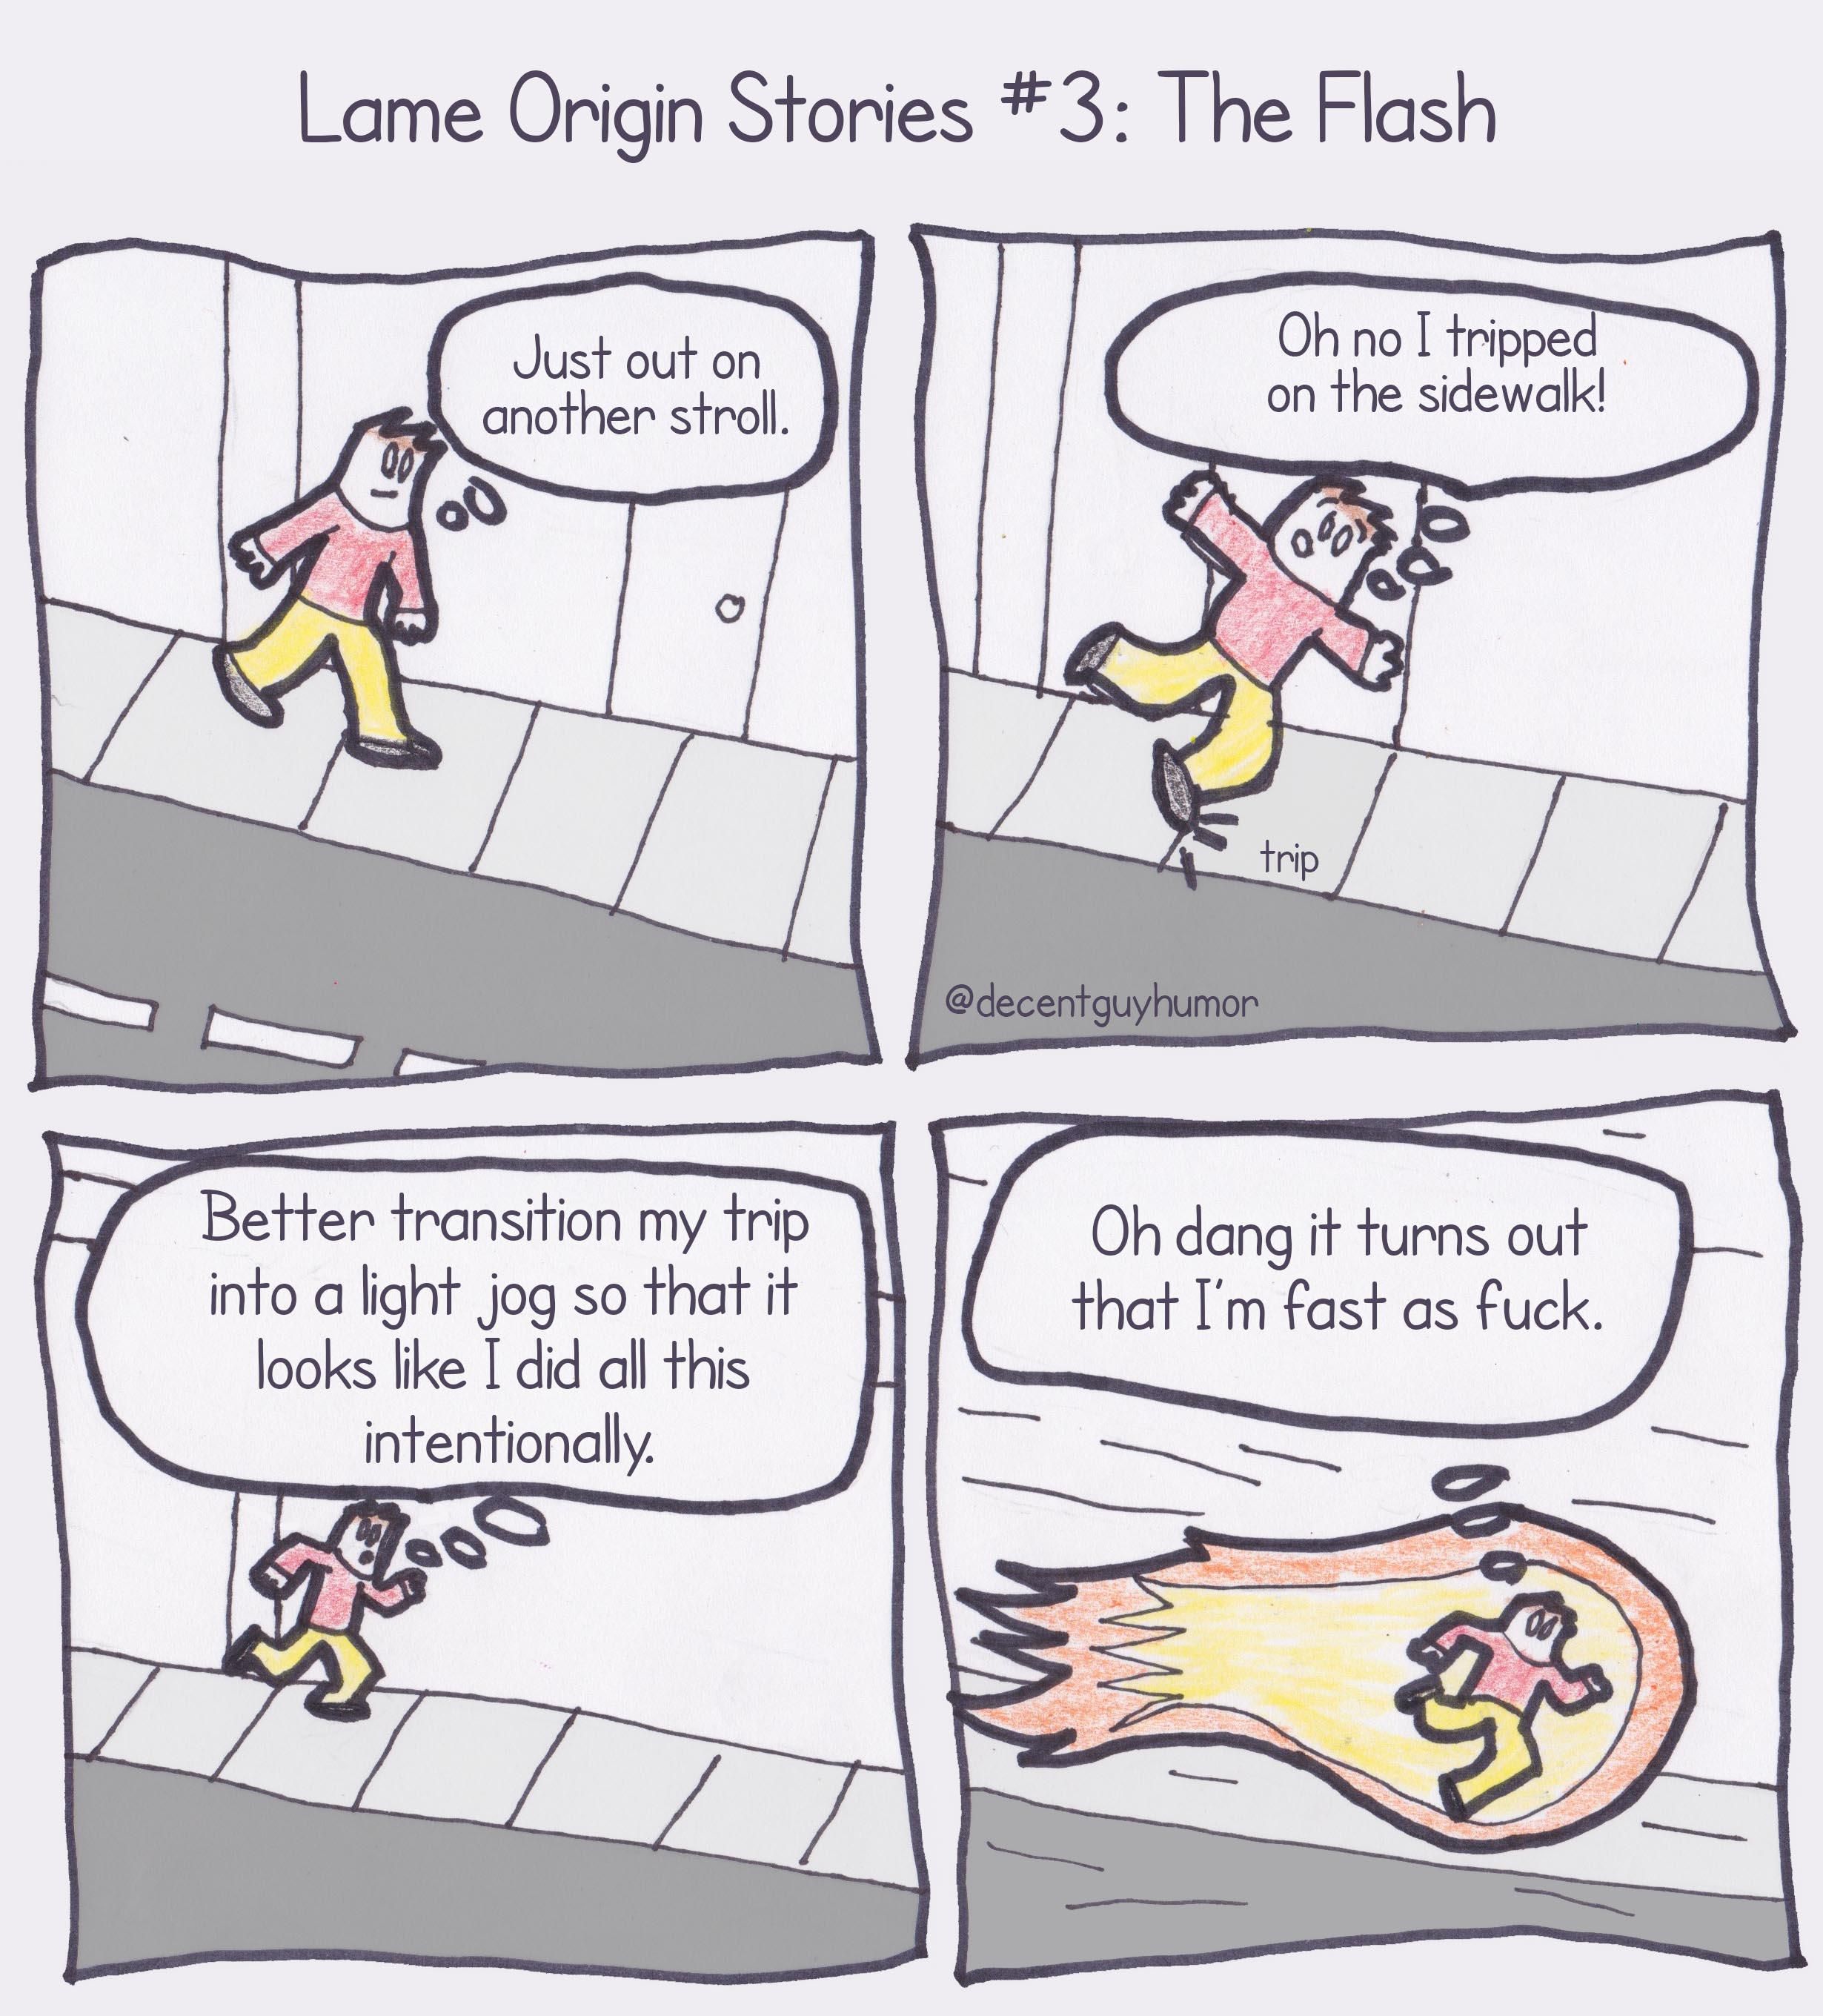 Lame Origin Stories: The Flash